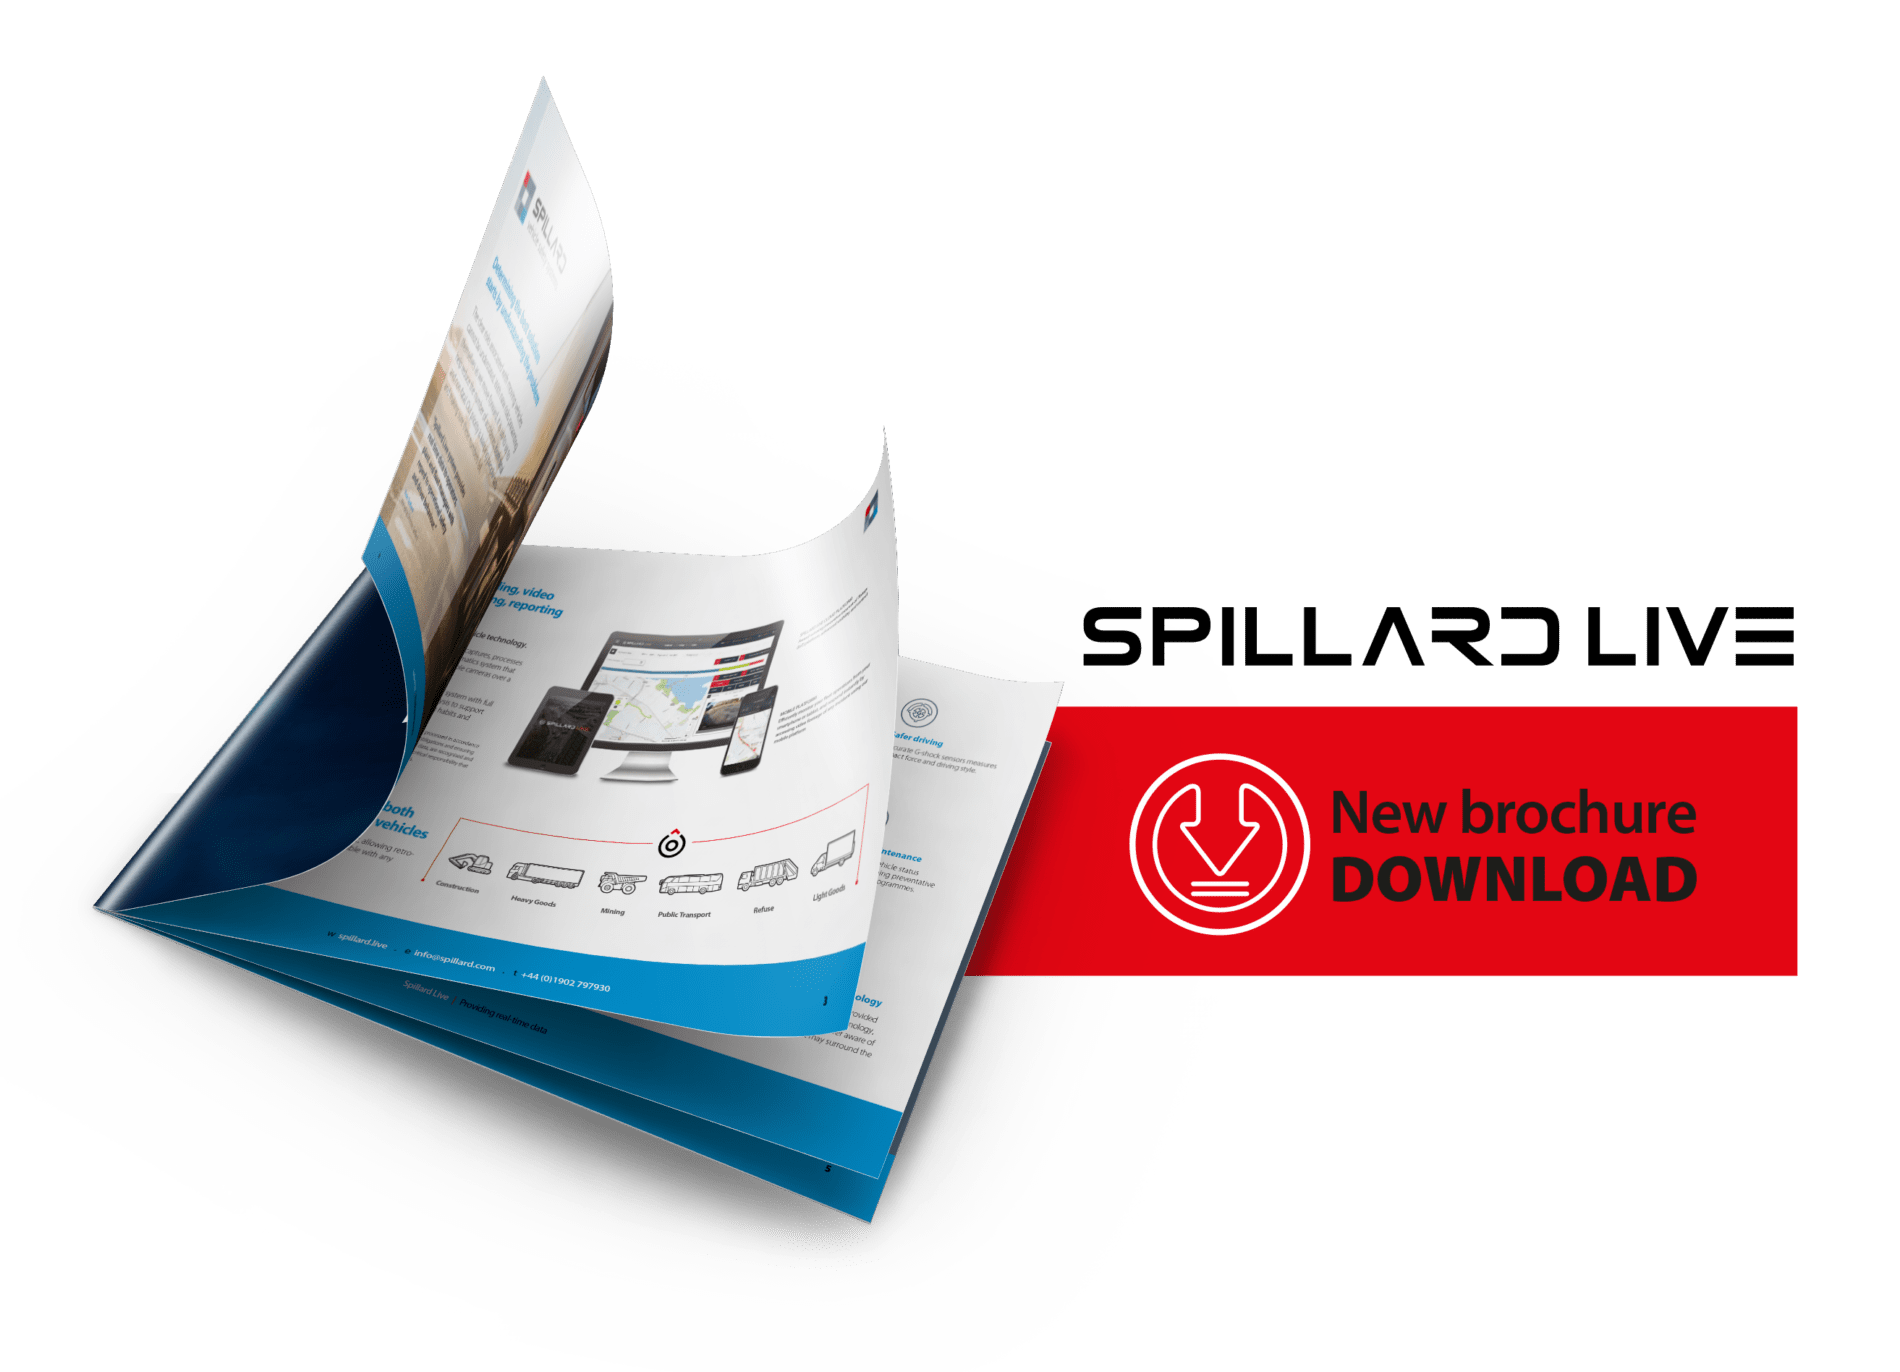 Public Transport - A4 Spillard LIVE brochure visual